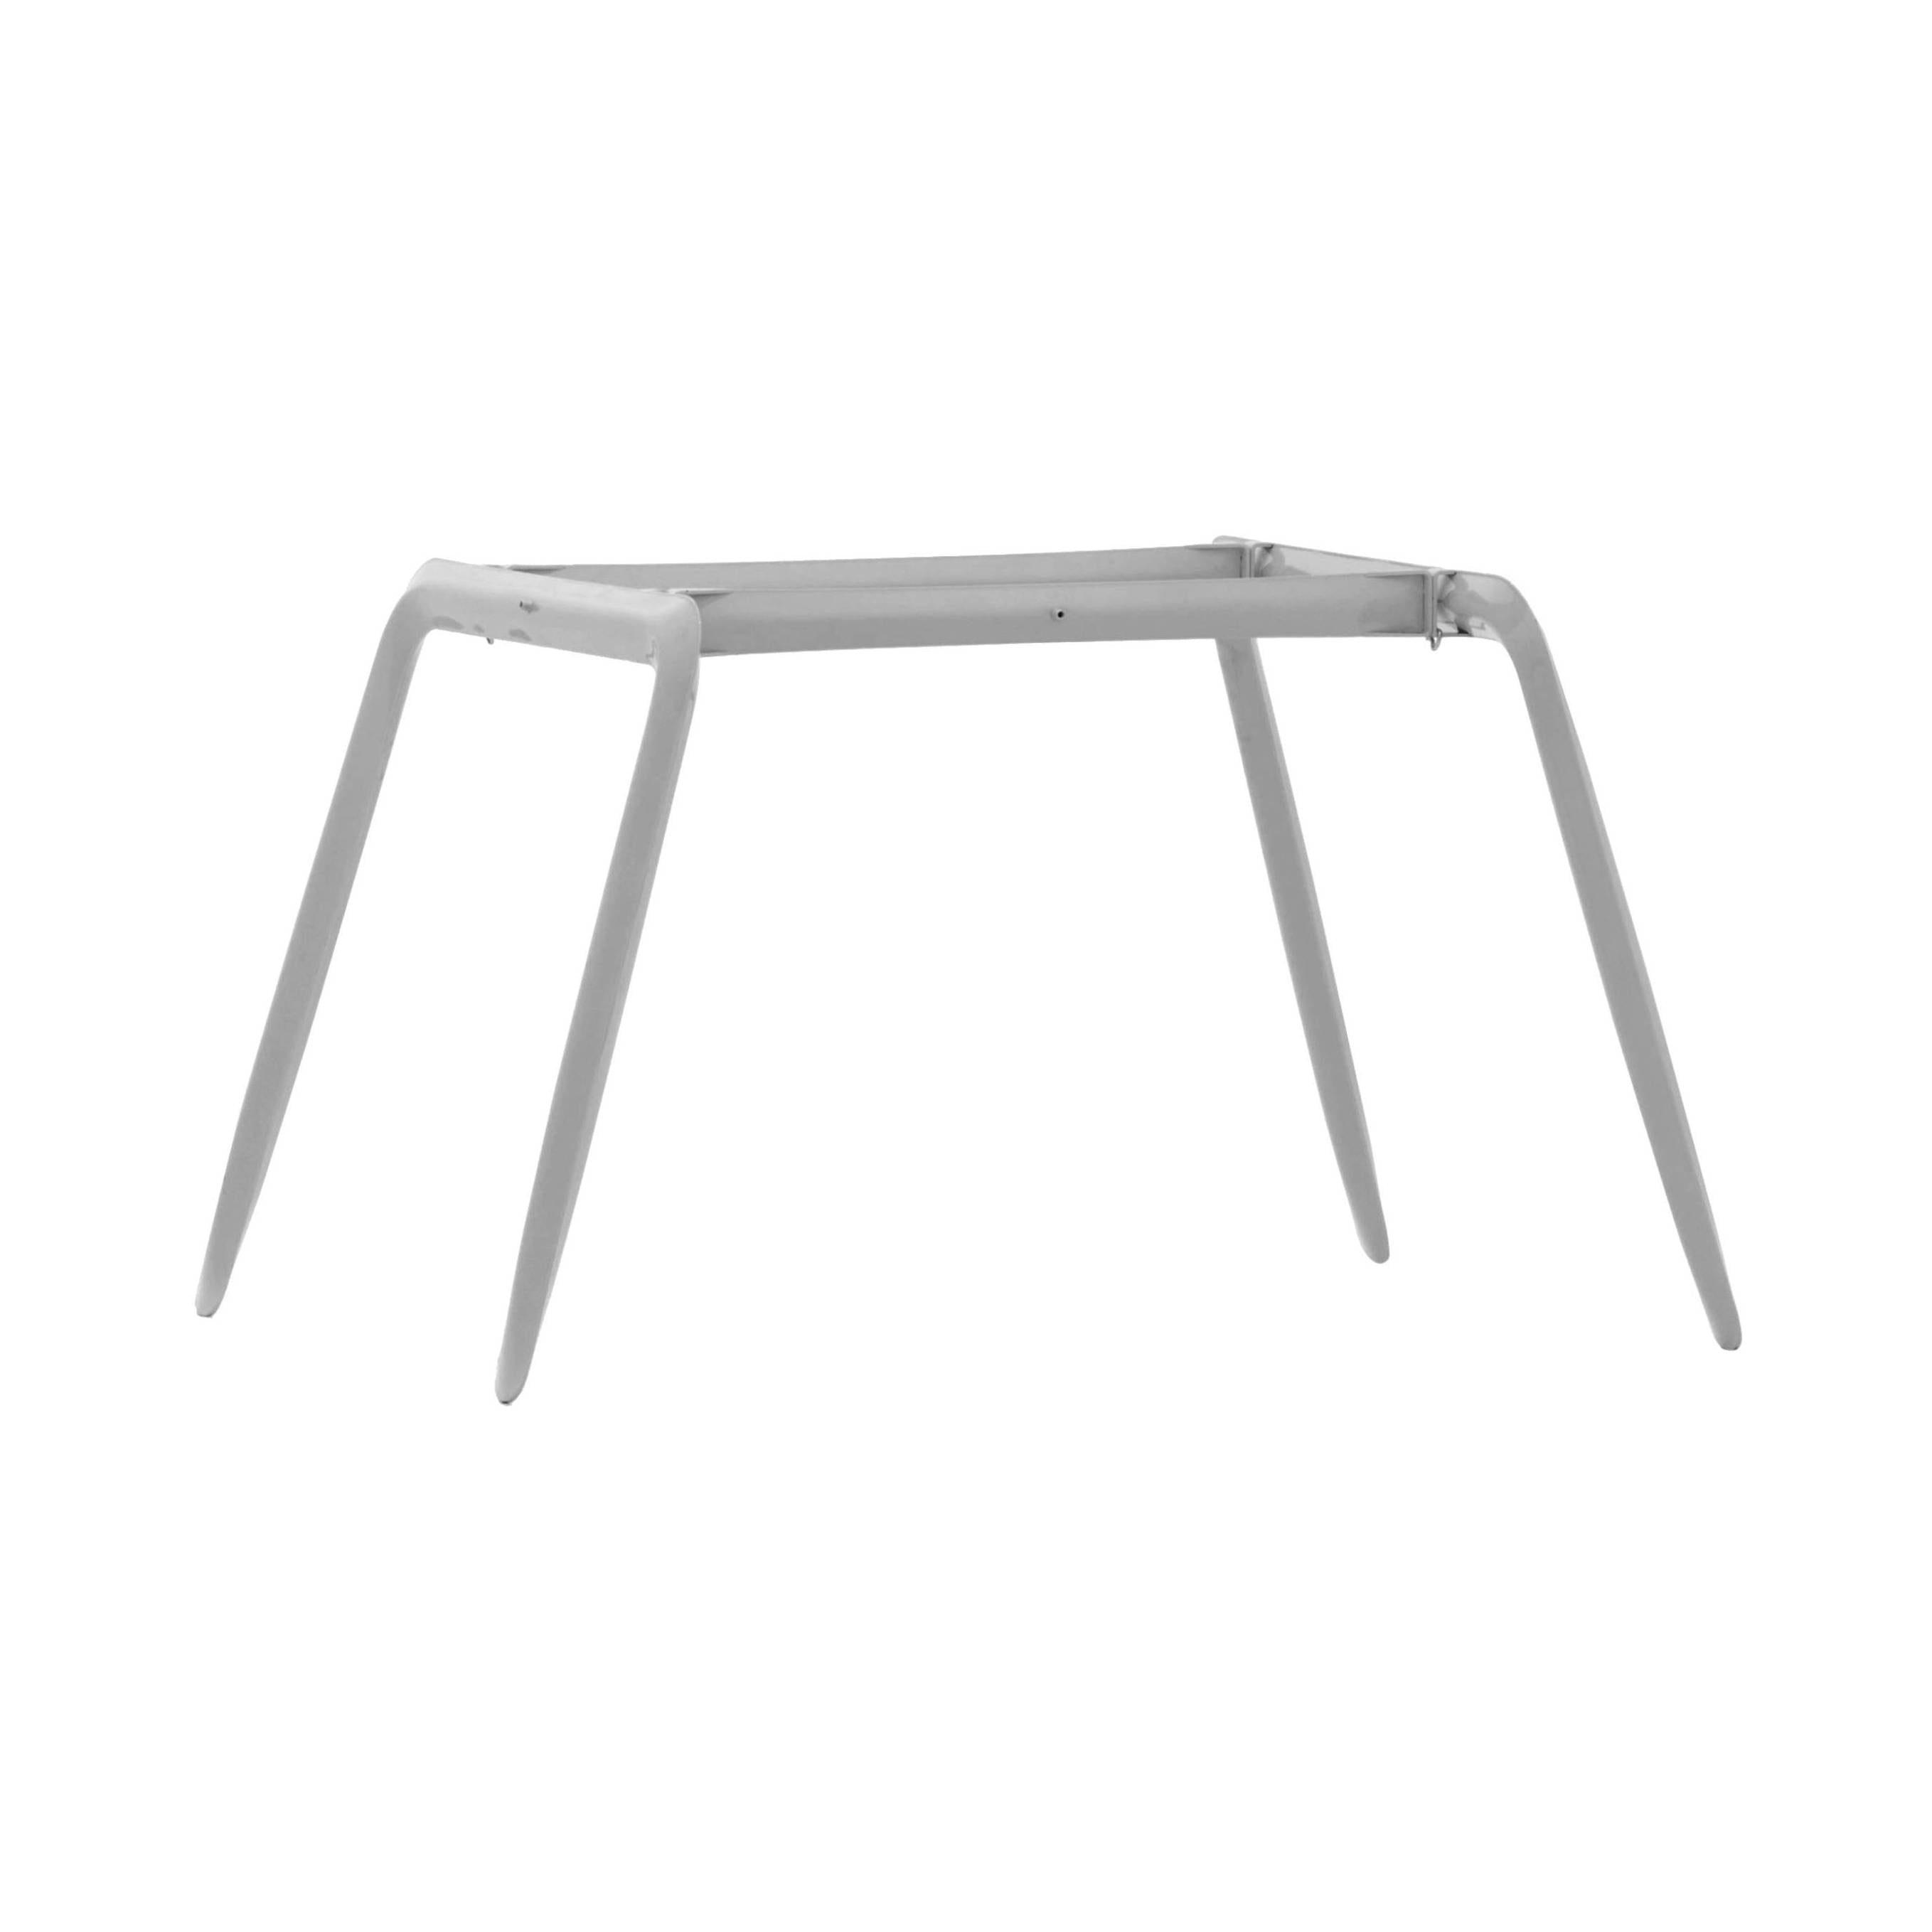 Koziol Table Frame: Beige Grey Carbon Steel